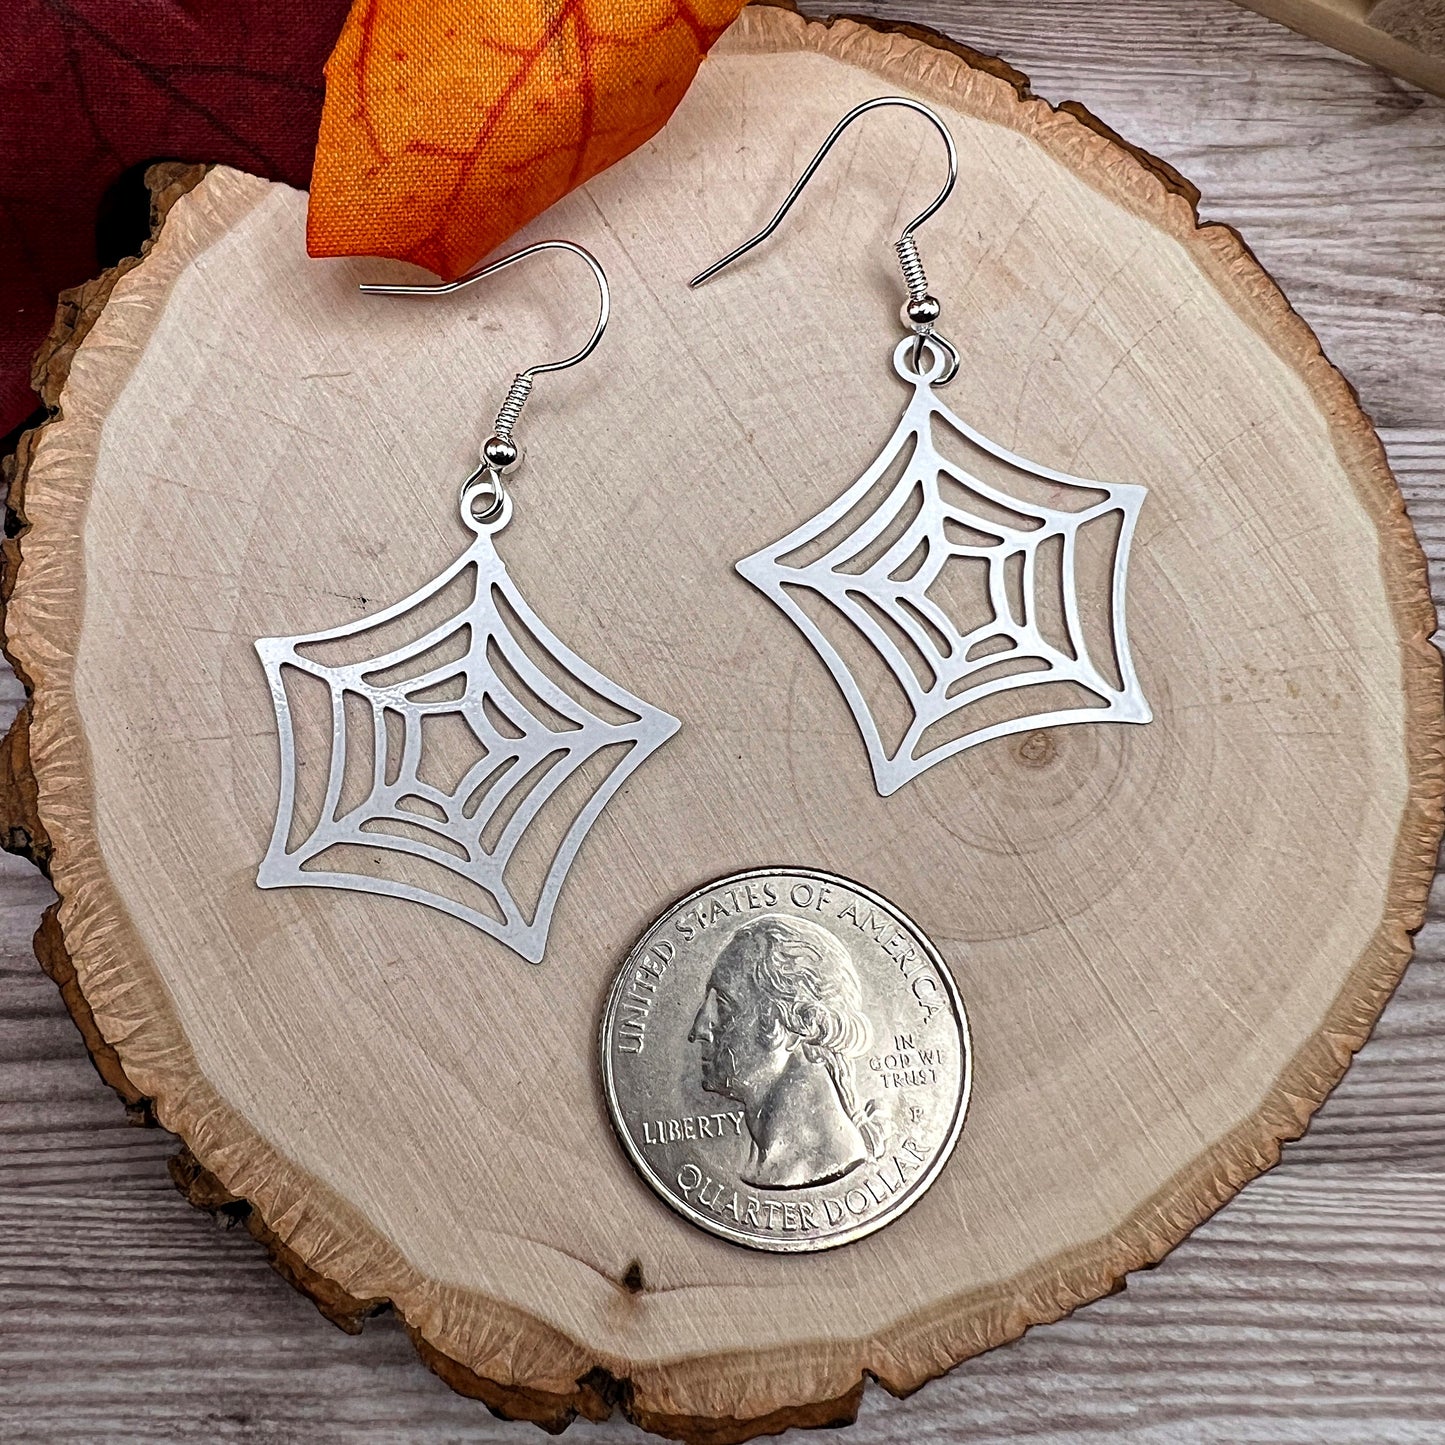 Spider Web Lightweight Brass White Hypoallergenic  Halloween Earrings